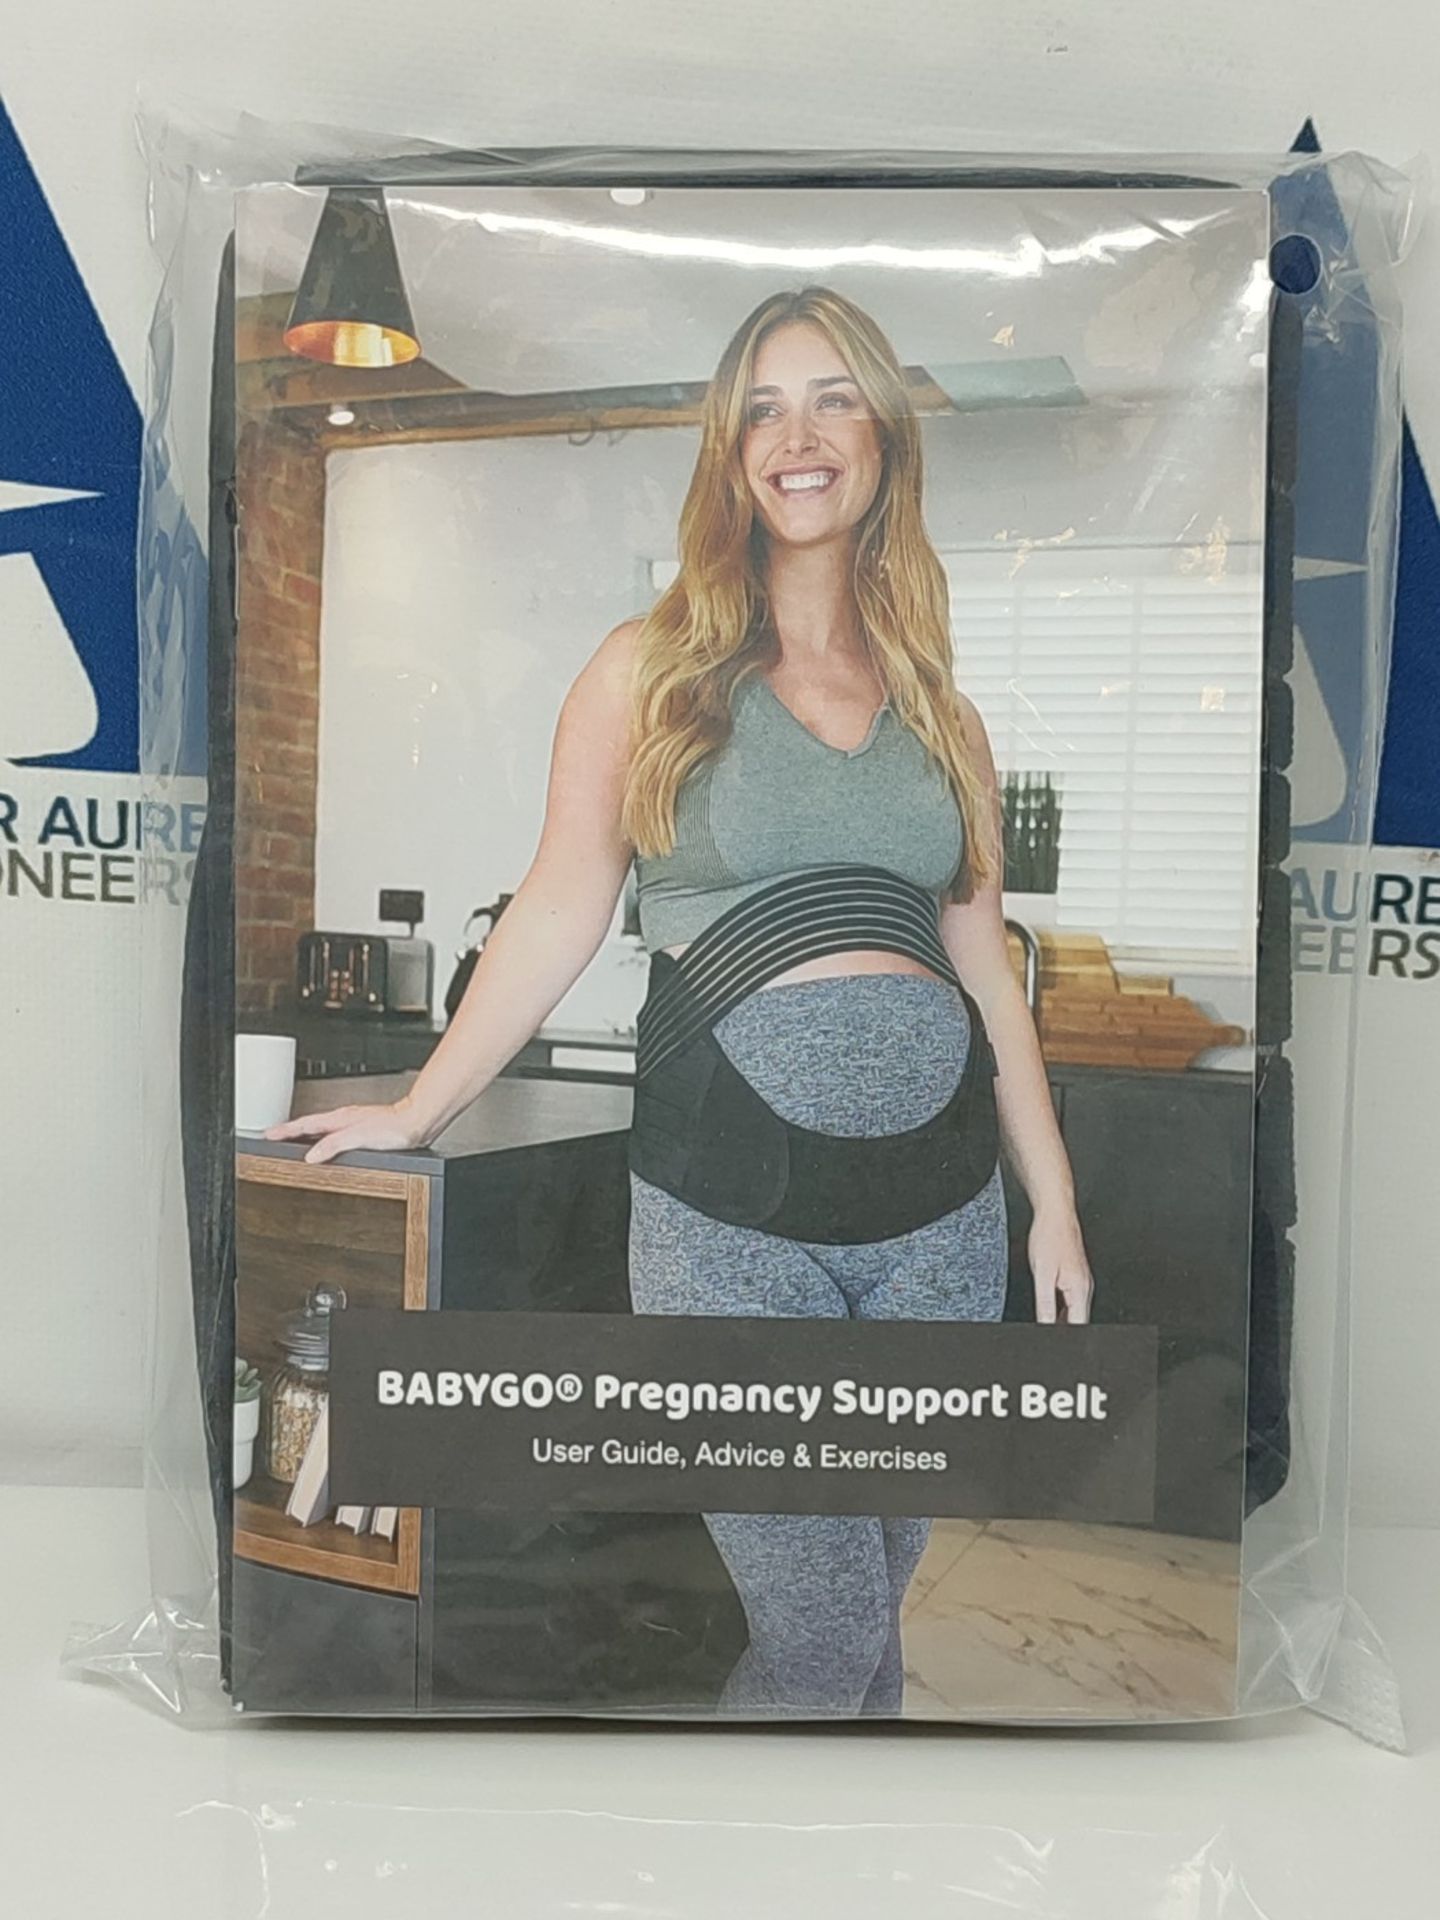 BABYGO® 4 in 1 Pregnancy Support Belt Maternity & Postpartum Band - Relieve Back, Pel